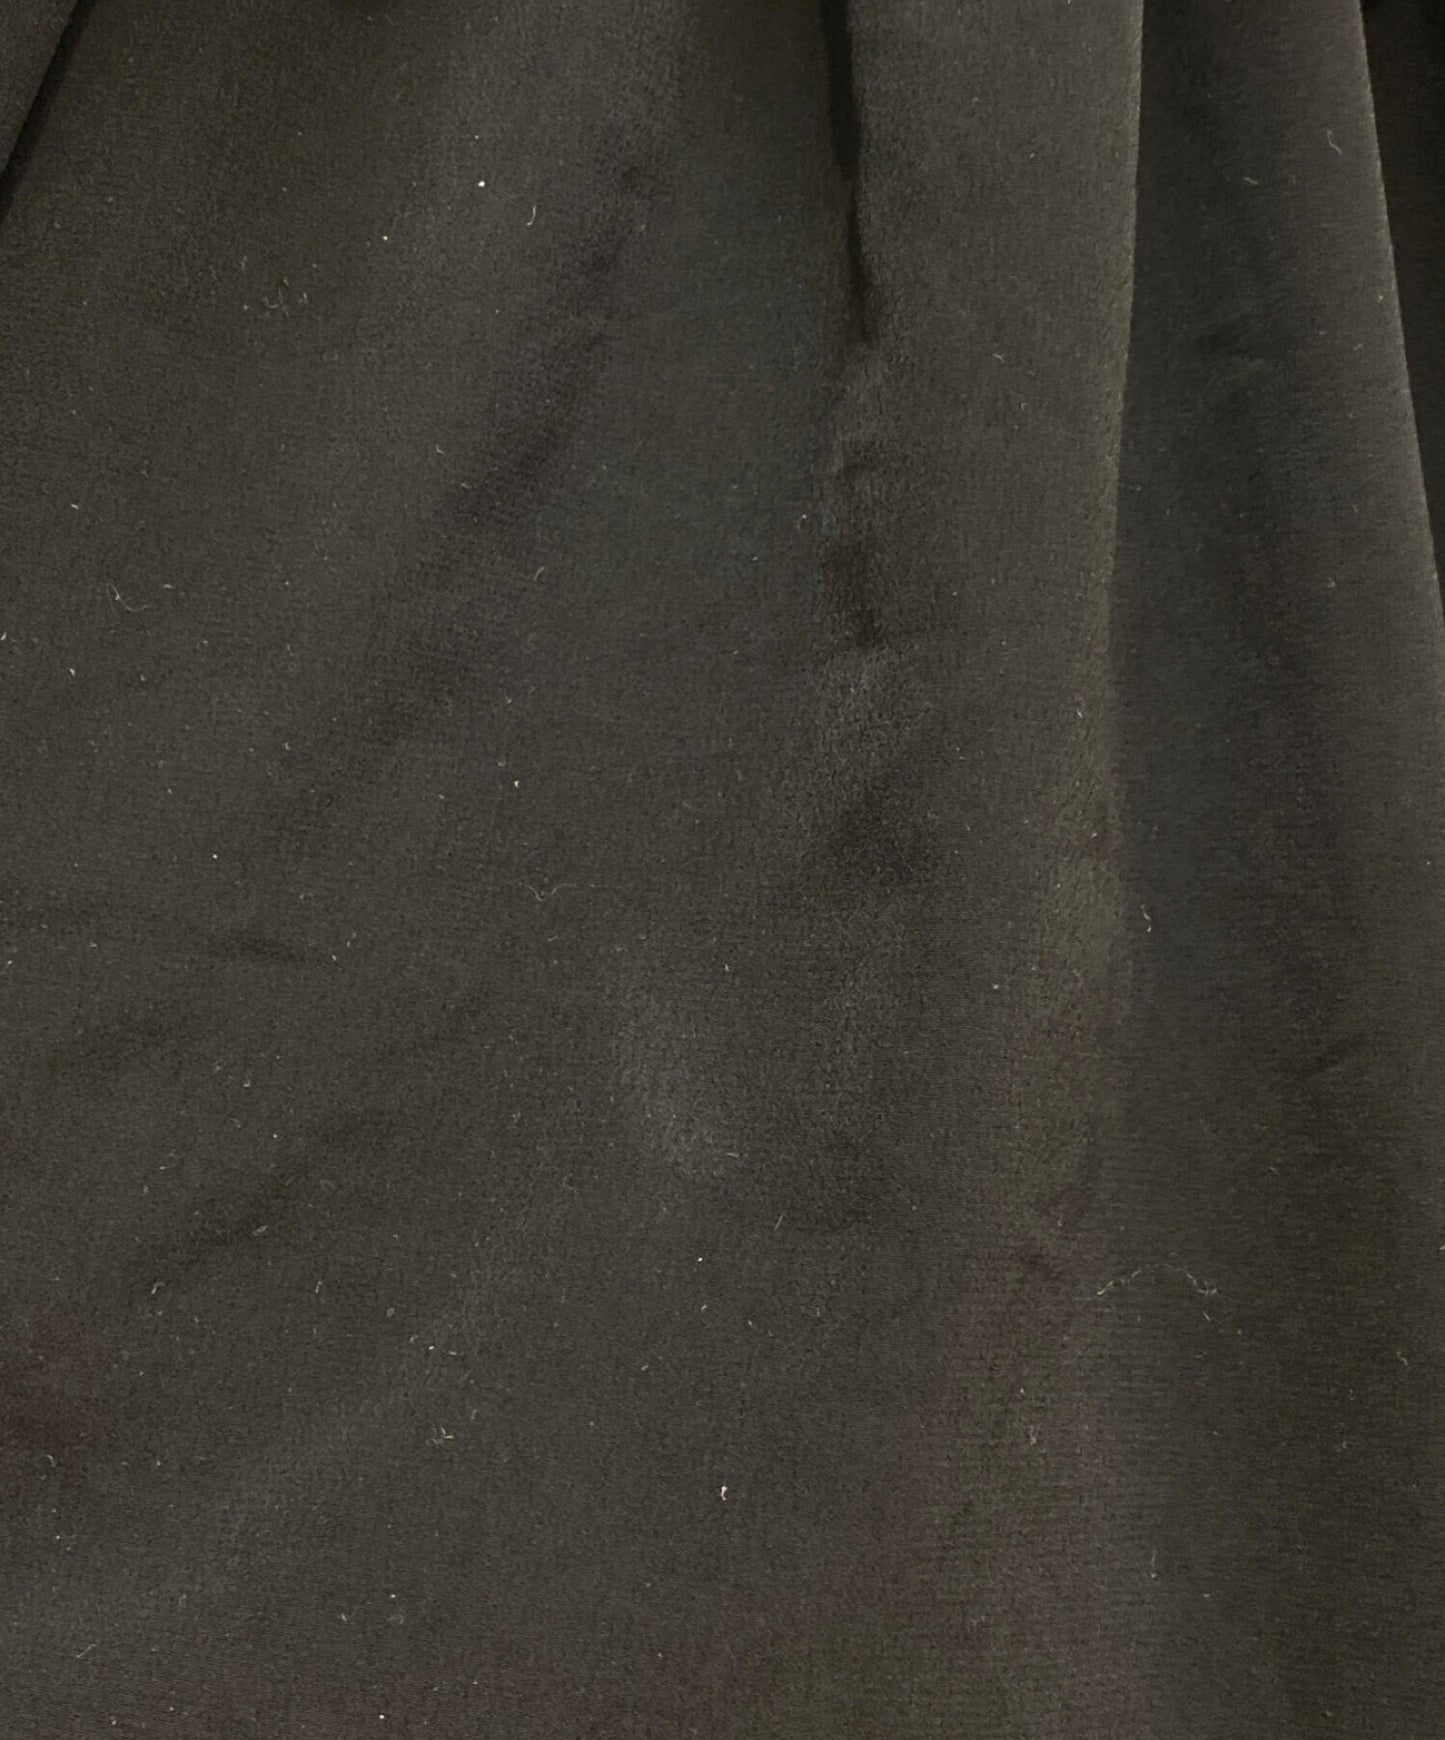 [Pre-owned] LIMI feu Asymmetrical Sleeveless Dress LY-T05-233